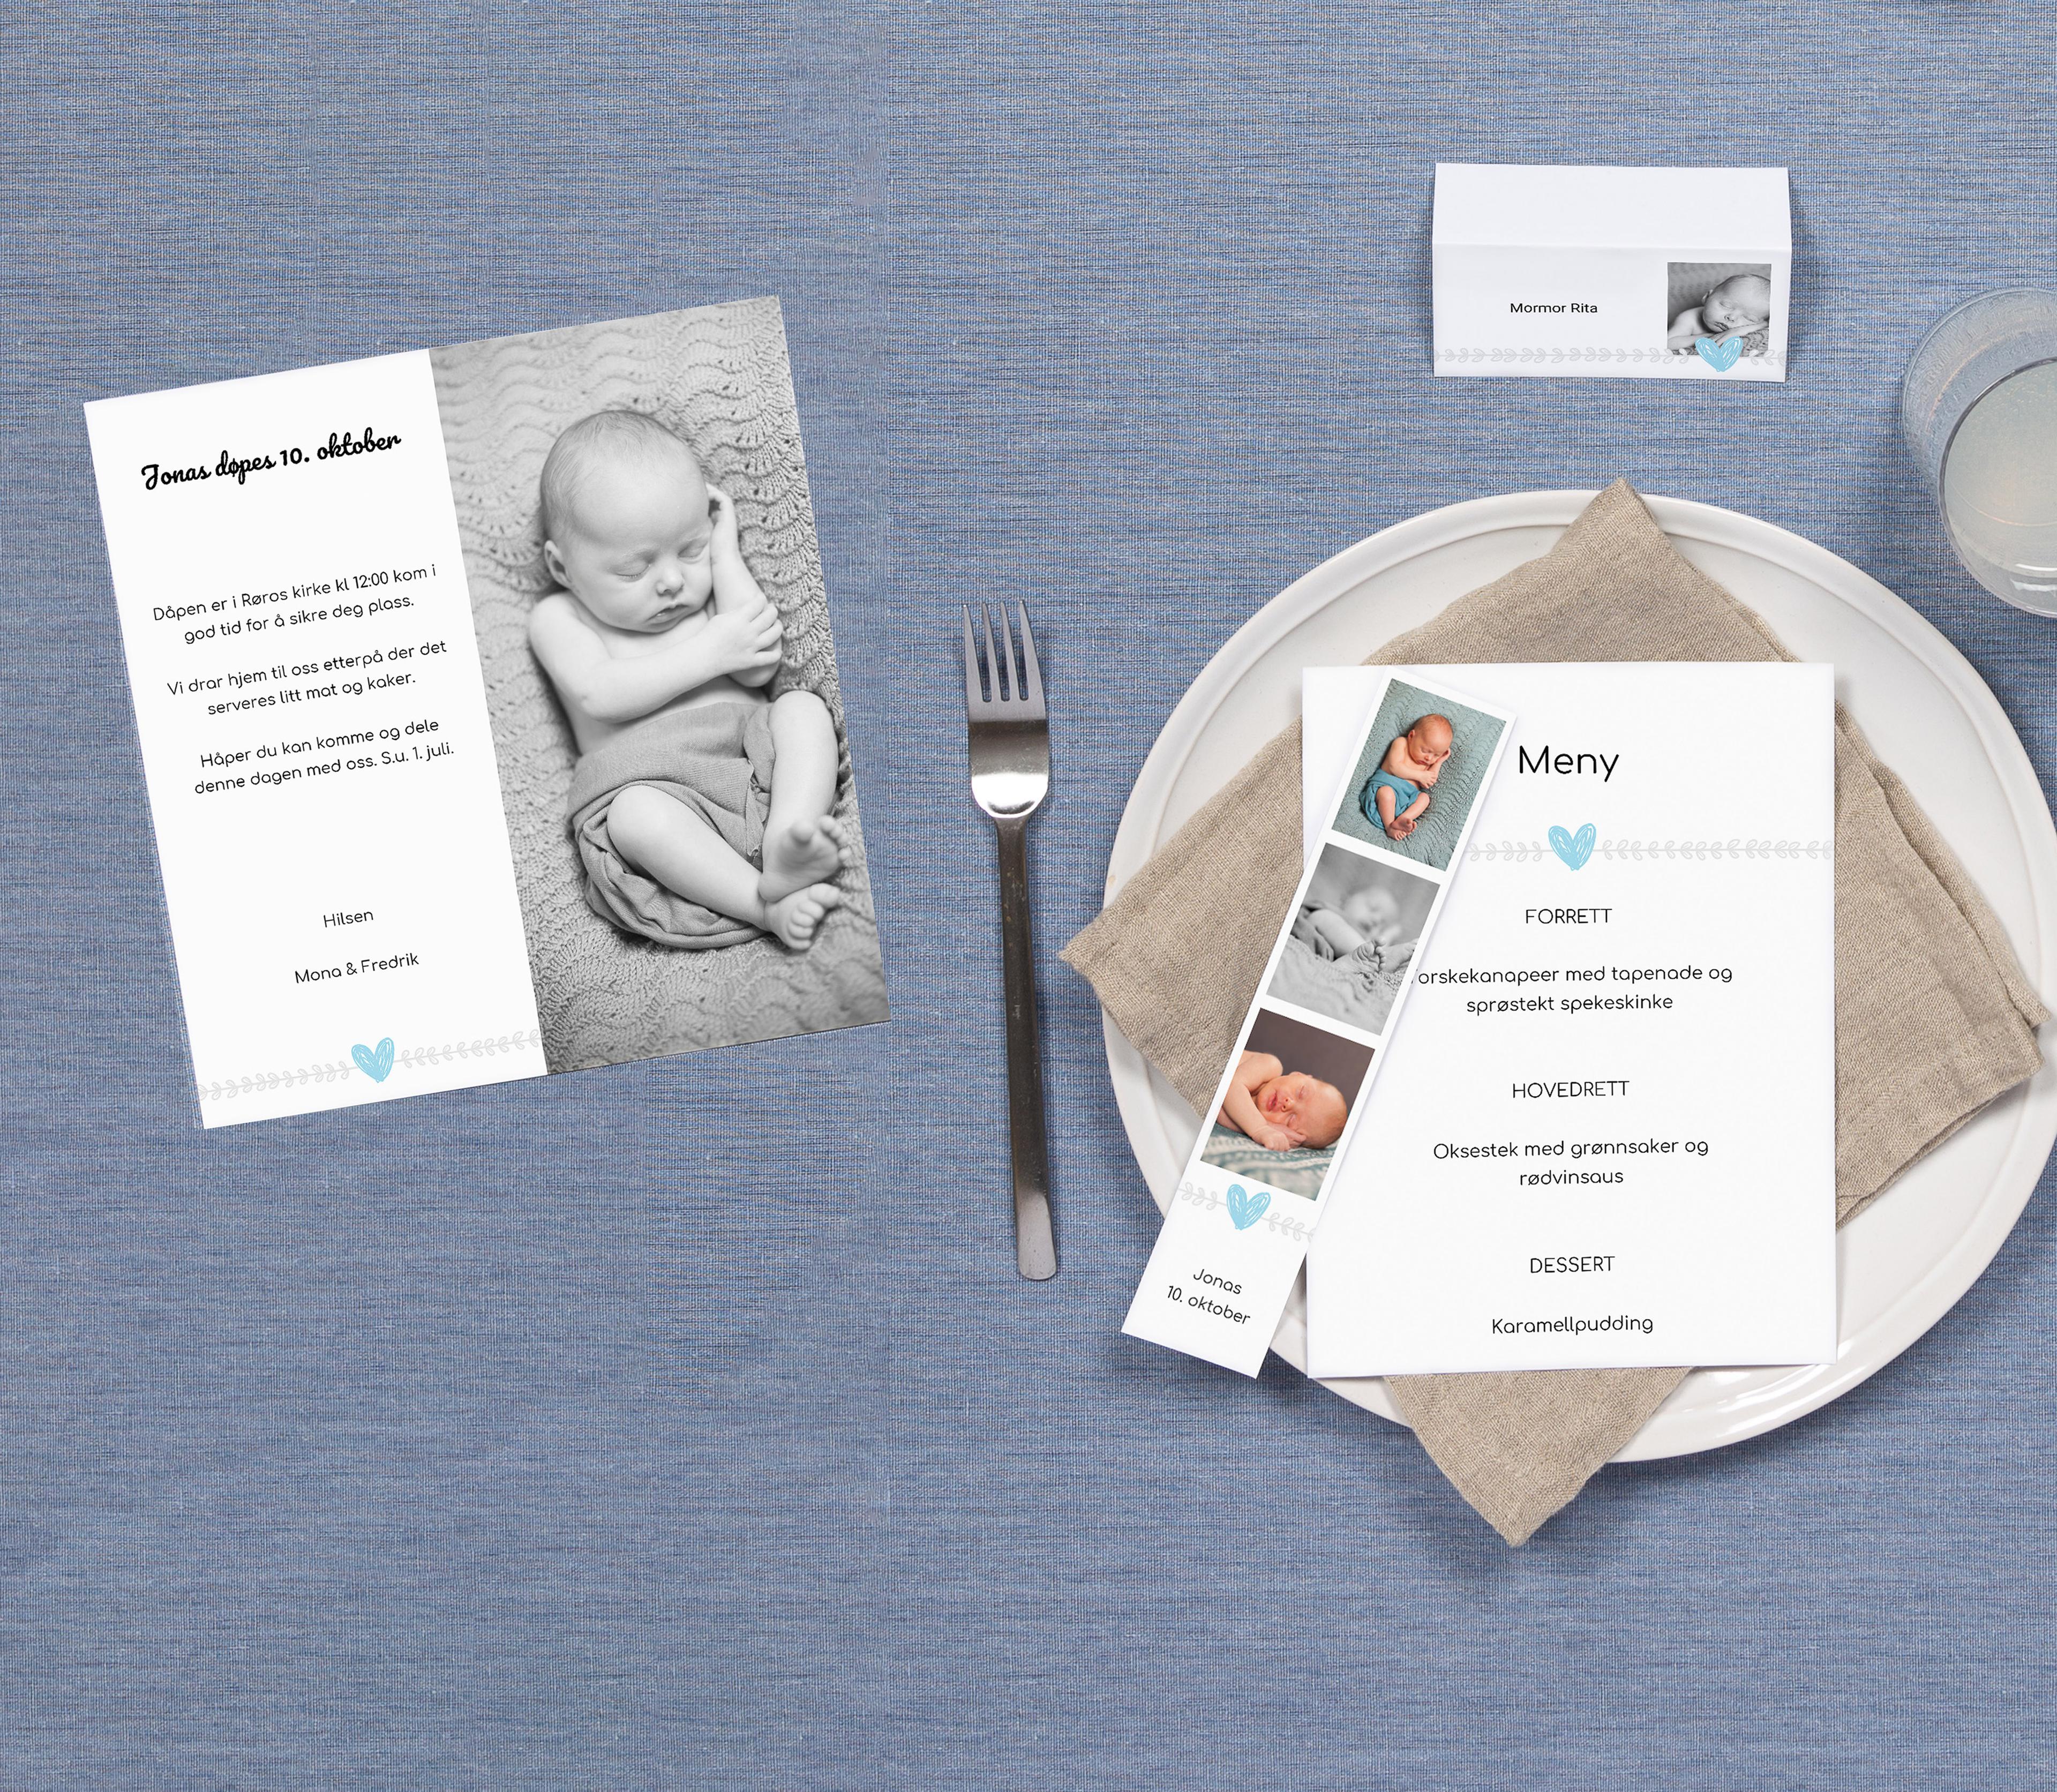 Dåpskort, meny og bordkort i samme design